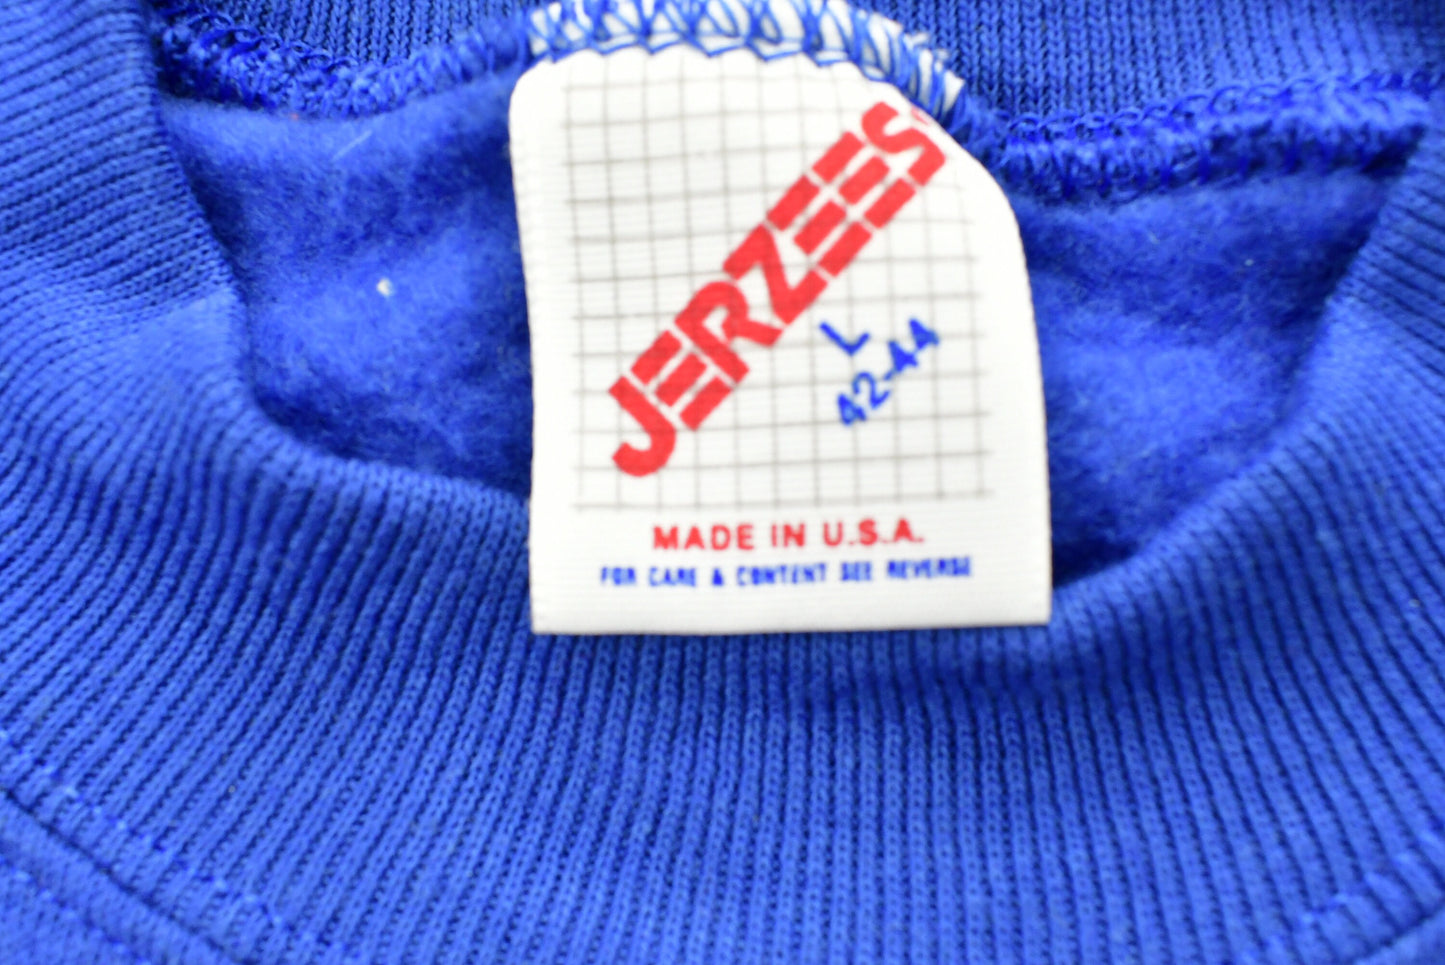 Vintage 1992 Centennial Community Of Hope Crewneck Sweatshirt / 90s Crewneck / Souvenir / Athleisure / Streetwear / Made In USA